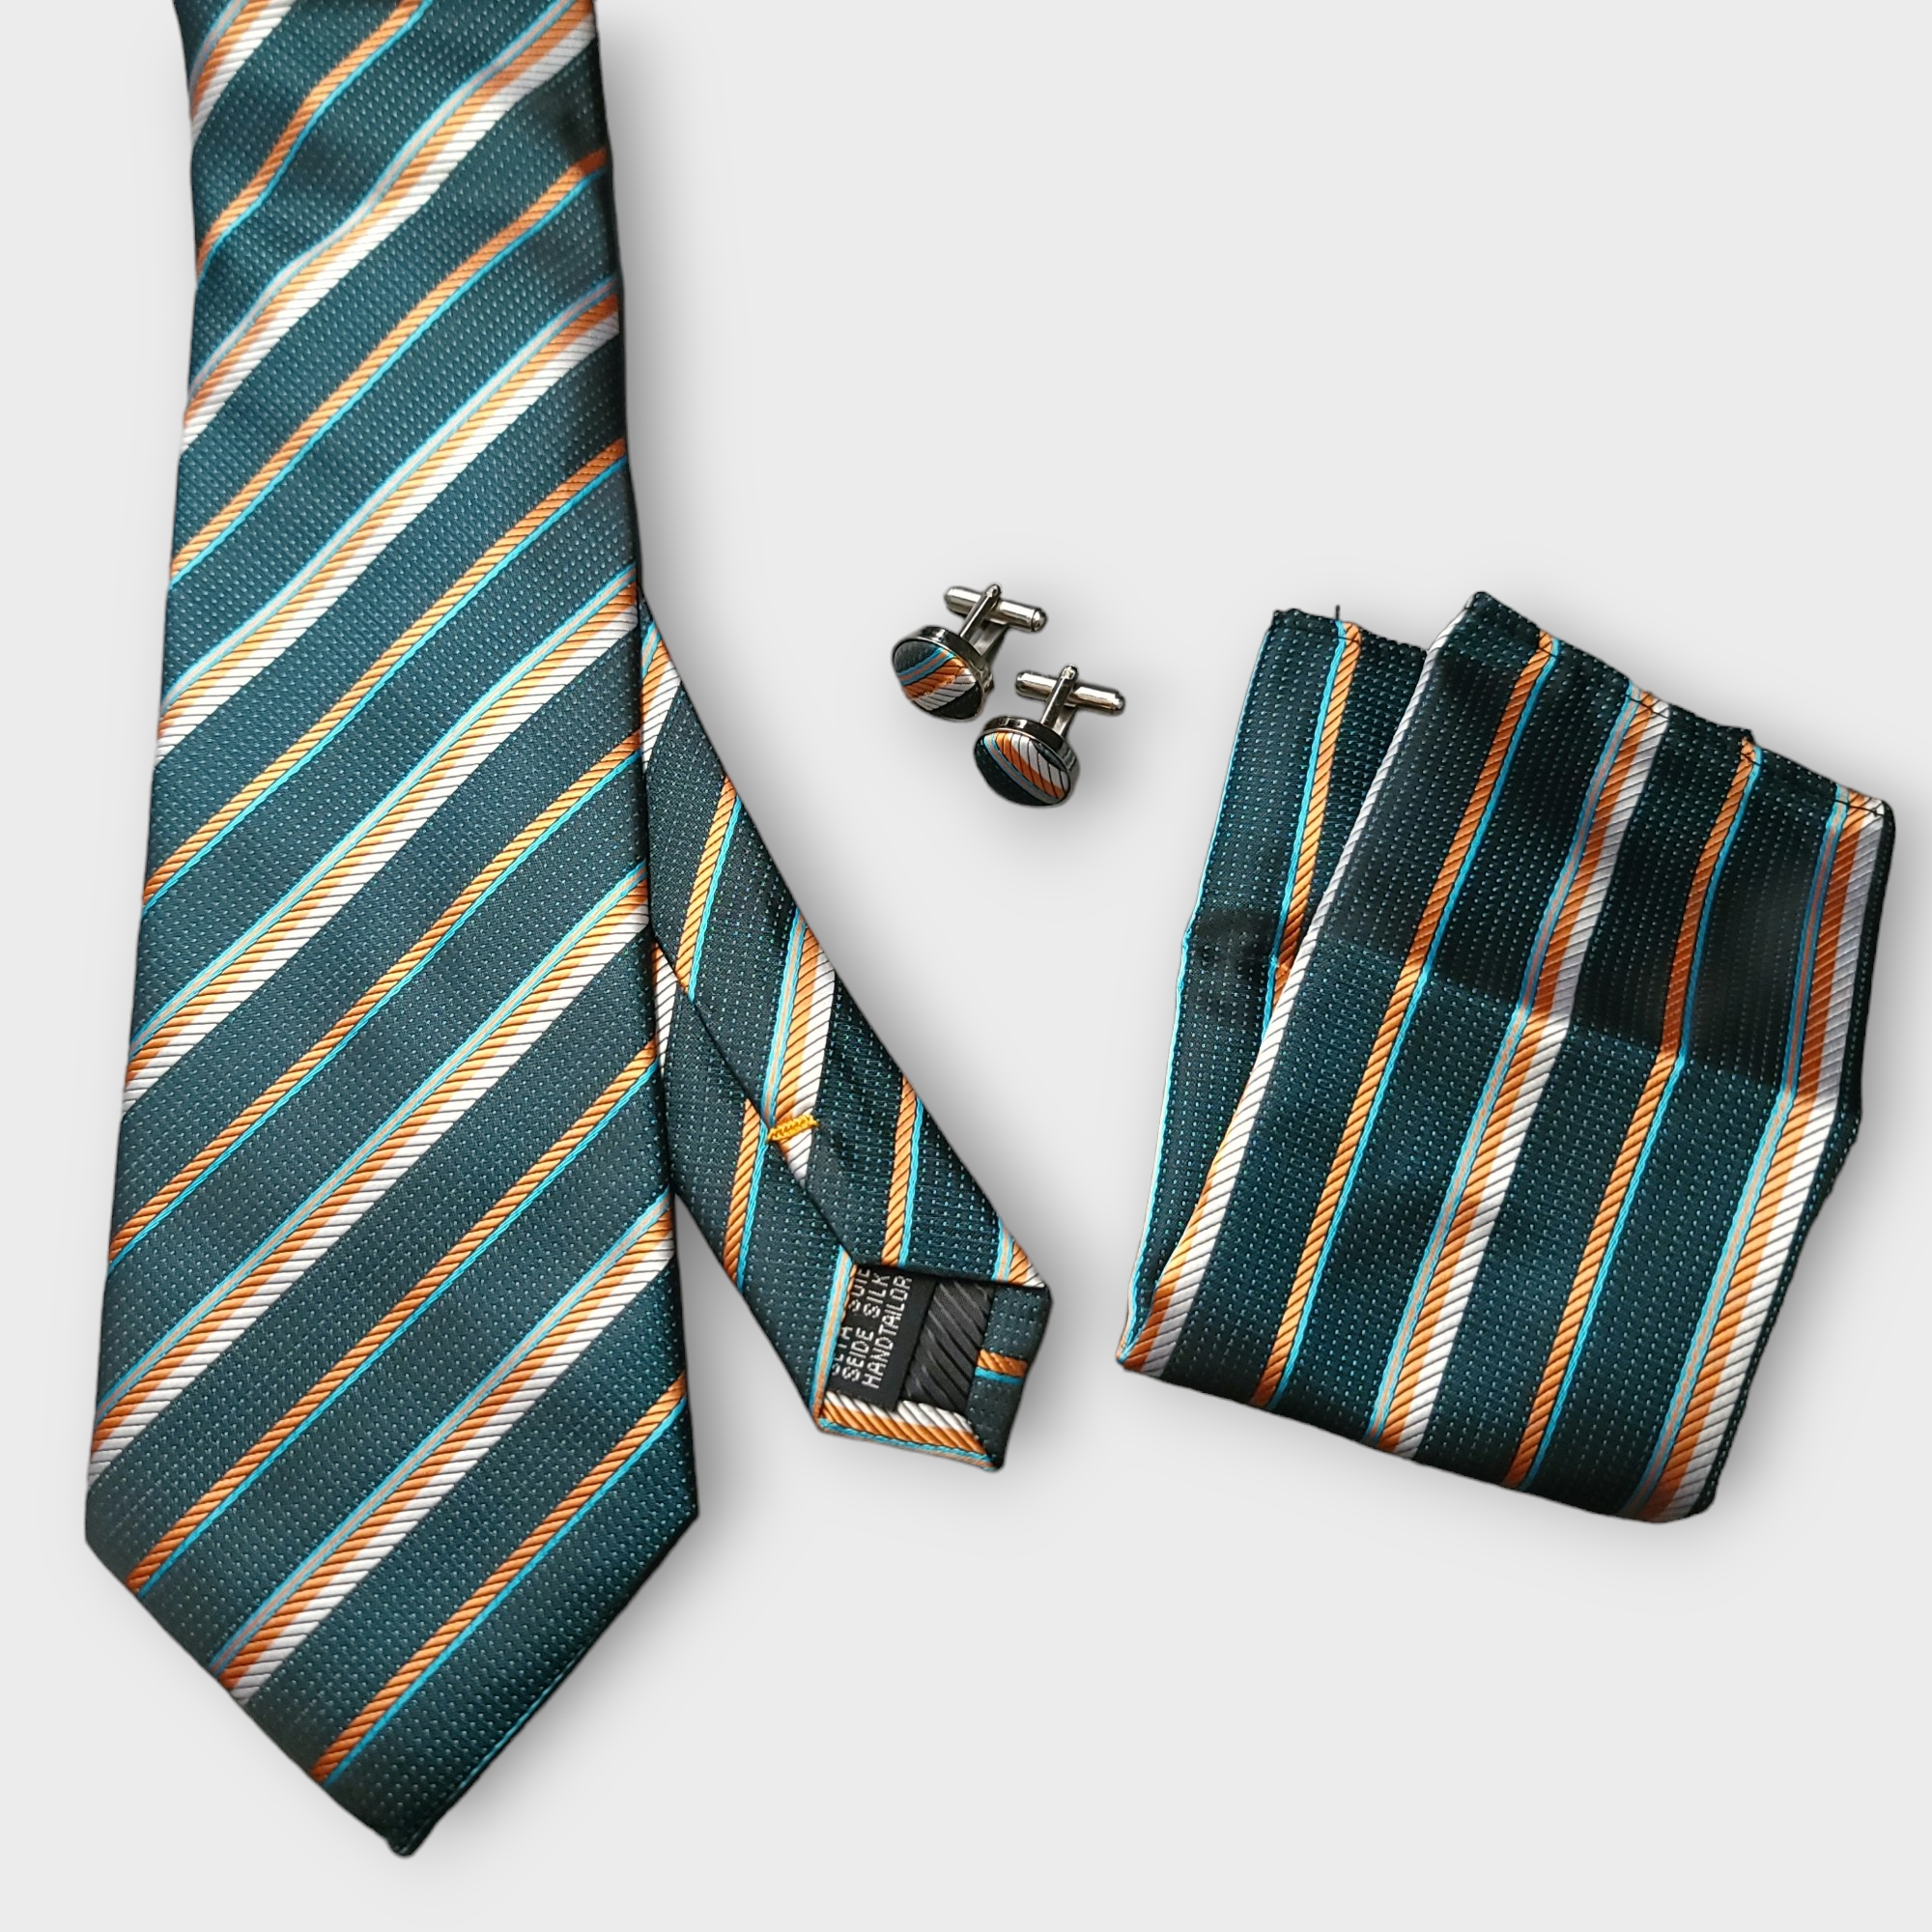 Black Teal Striped Silk Tie Pocket Square Cufflink Set